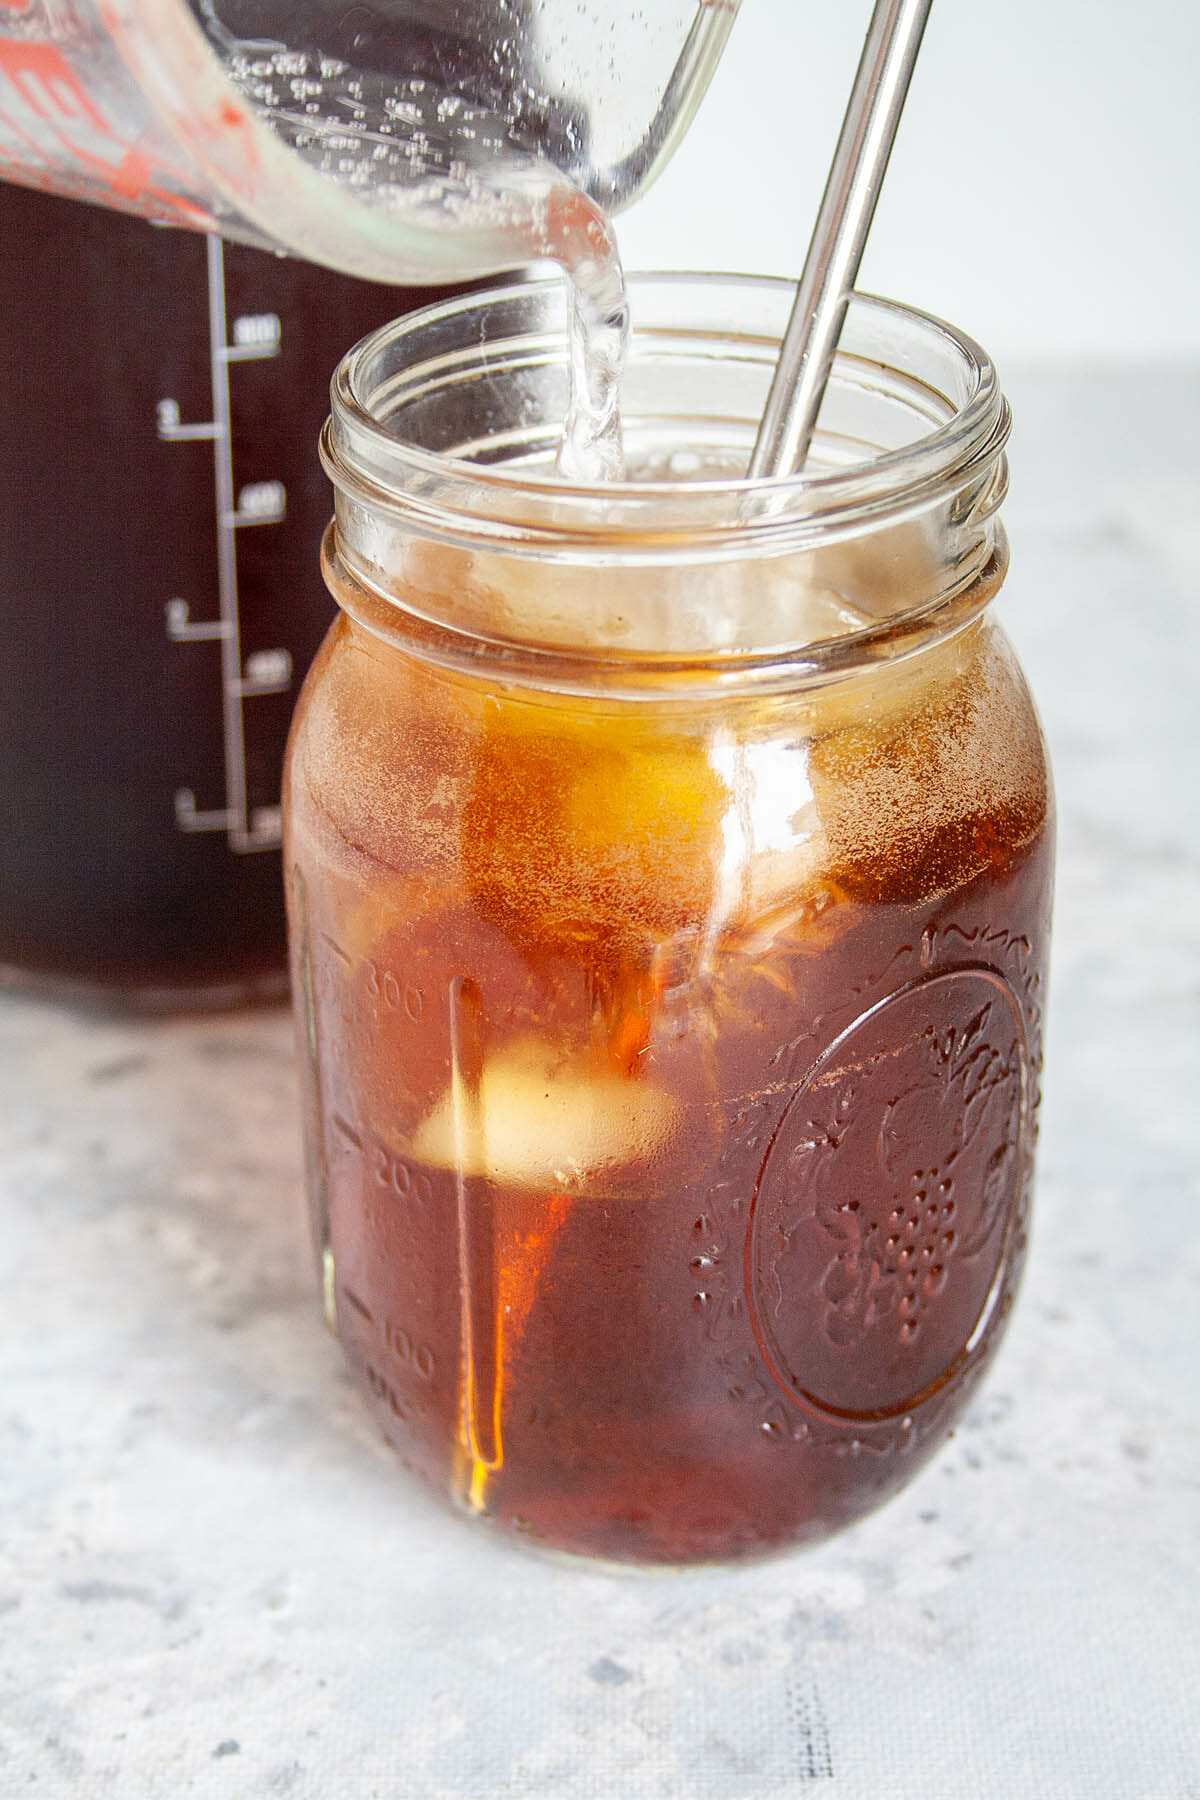 Club soda being poured into a mason jar with coffee.